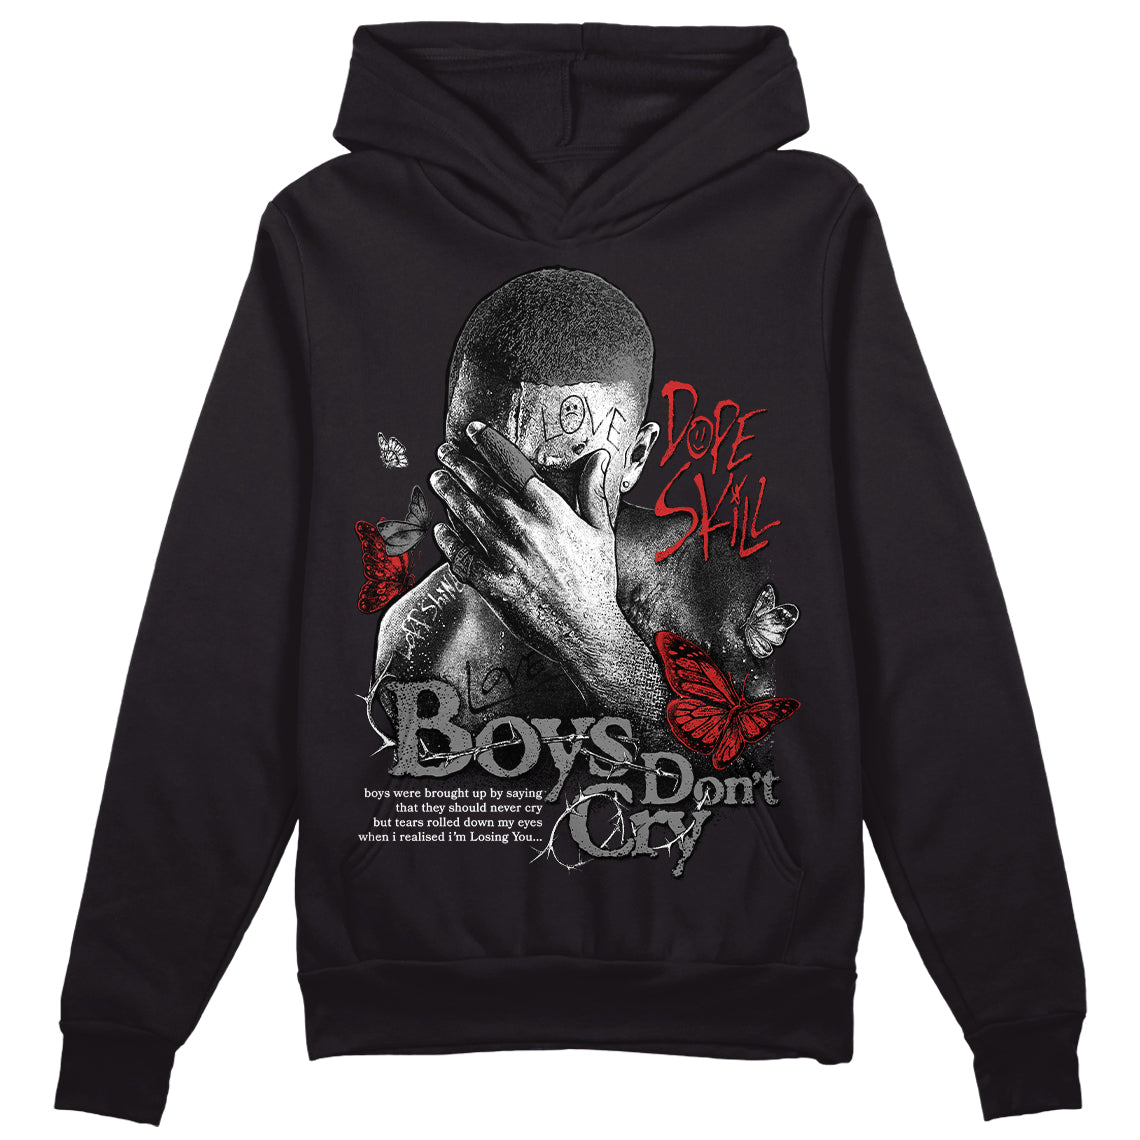 Jordan 1 High OG “Black/White” DopeSkill Hoodie Sweatshirt Boys Don't Cry Graphic Streetwear - Black